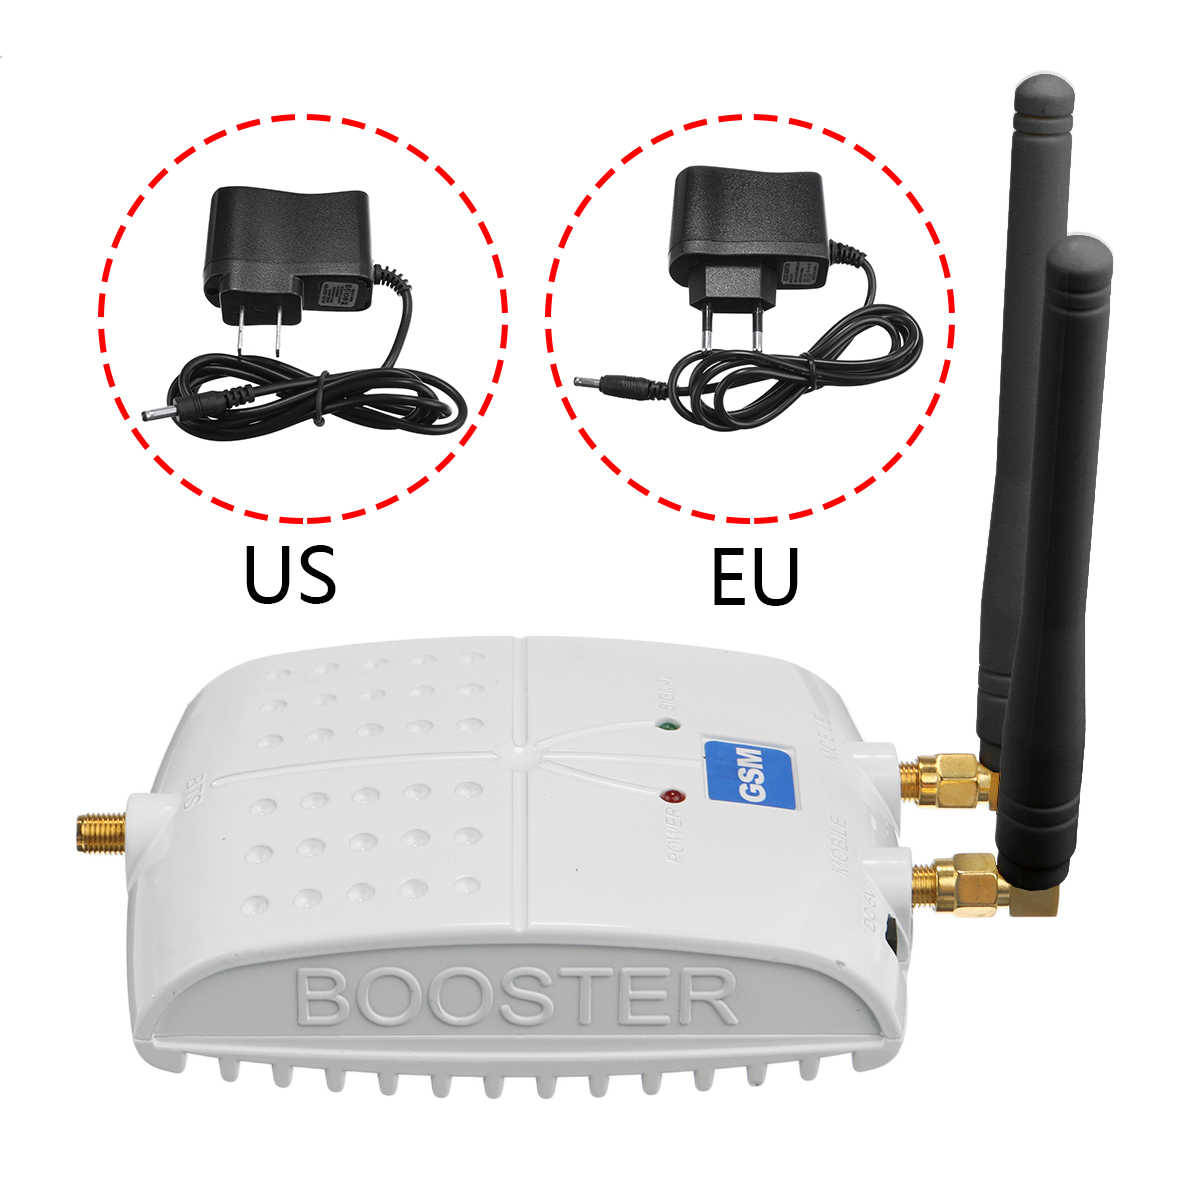 1800MHz-Repeater-4G-LTE-Signal-Amplifier-Receiving-Signal-Enhancement-Antenna-WiFi-Booster-1760071